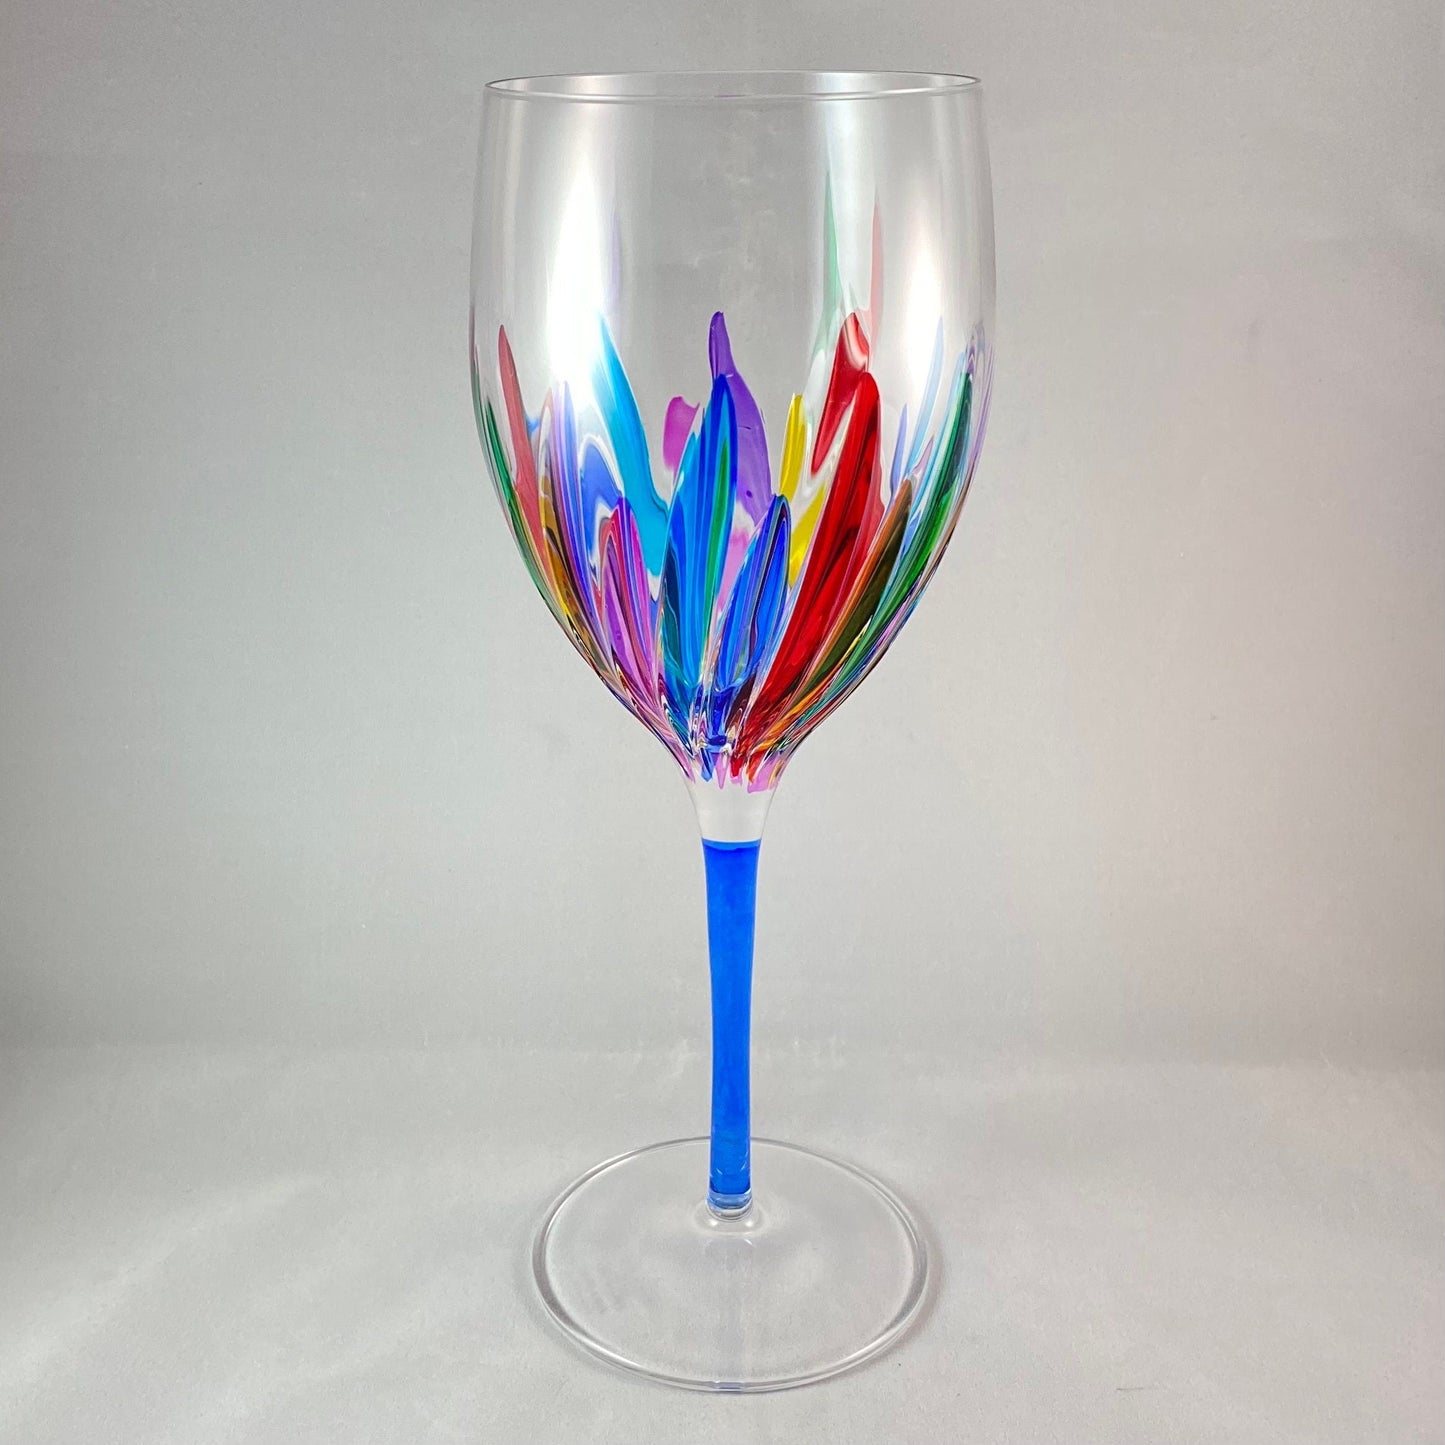 Blue Stem Incanto Venetian Glass Wine Glass - Handmade in Italy, Colorful Murano Glass